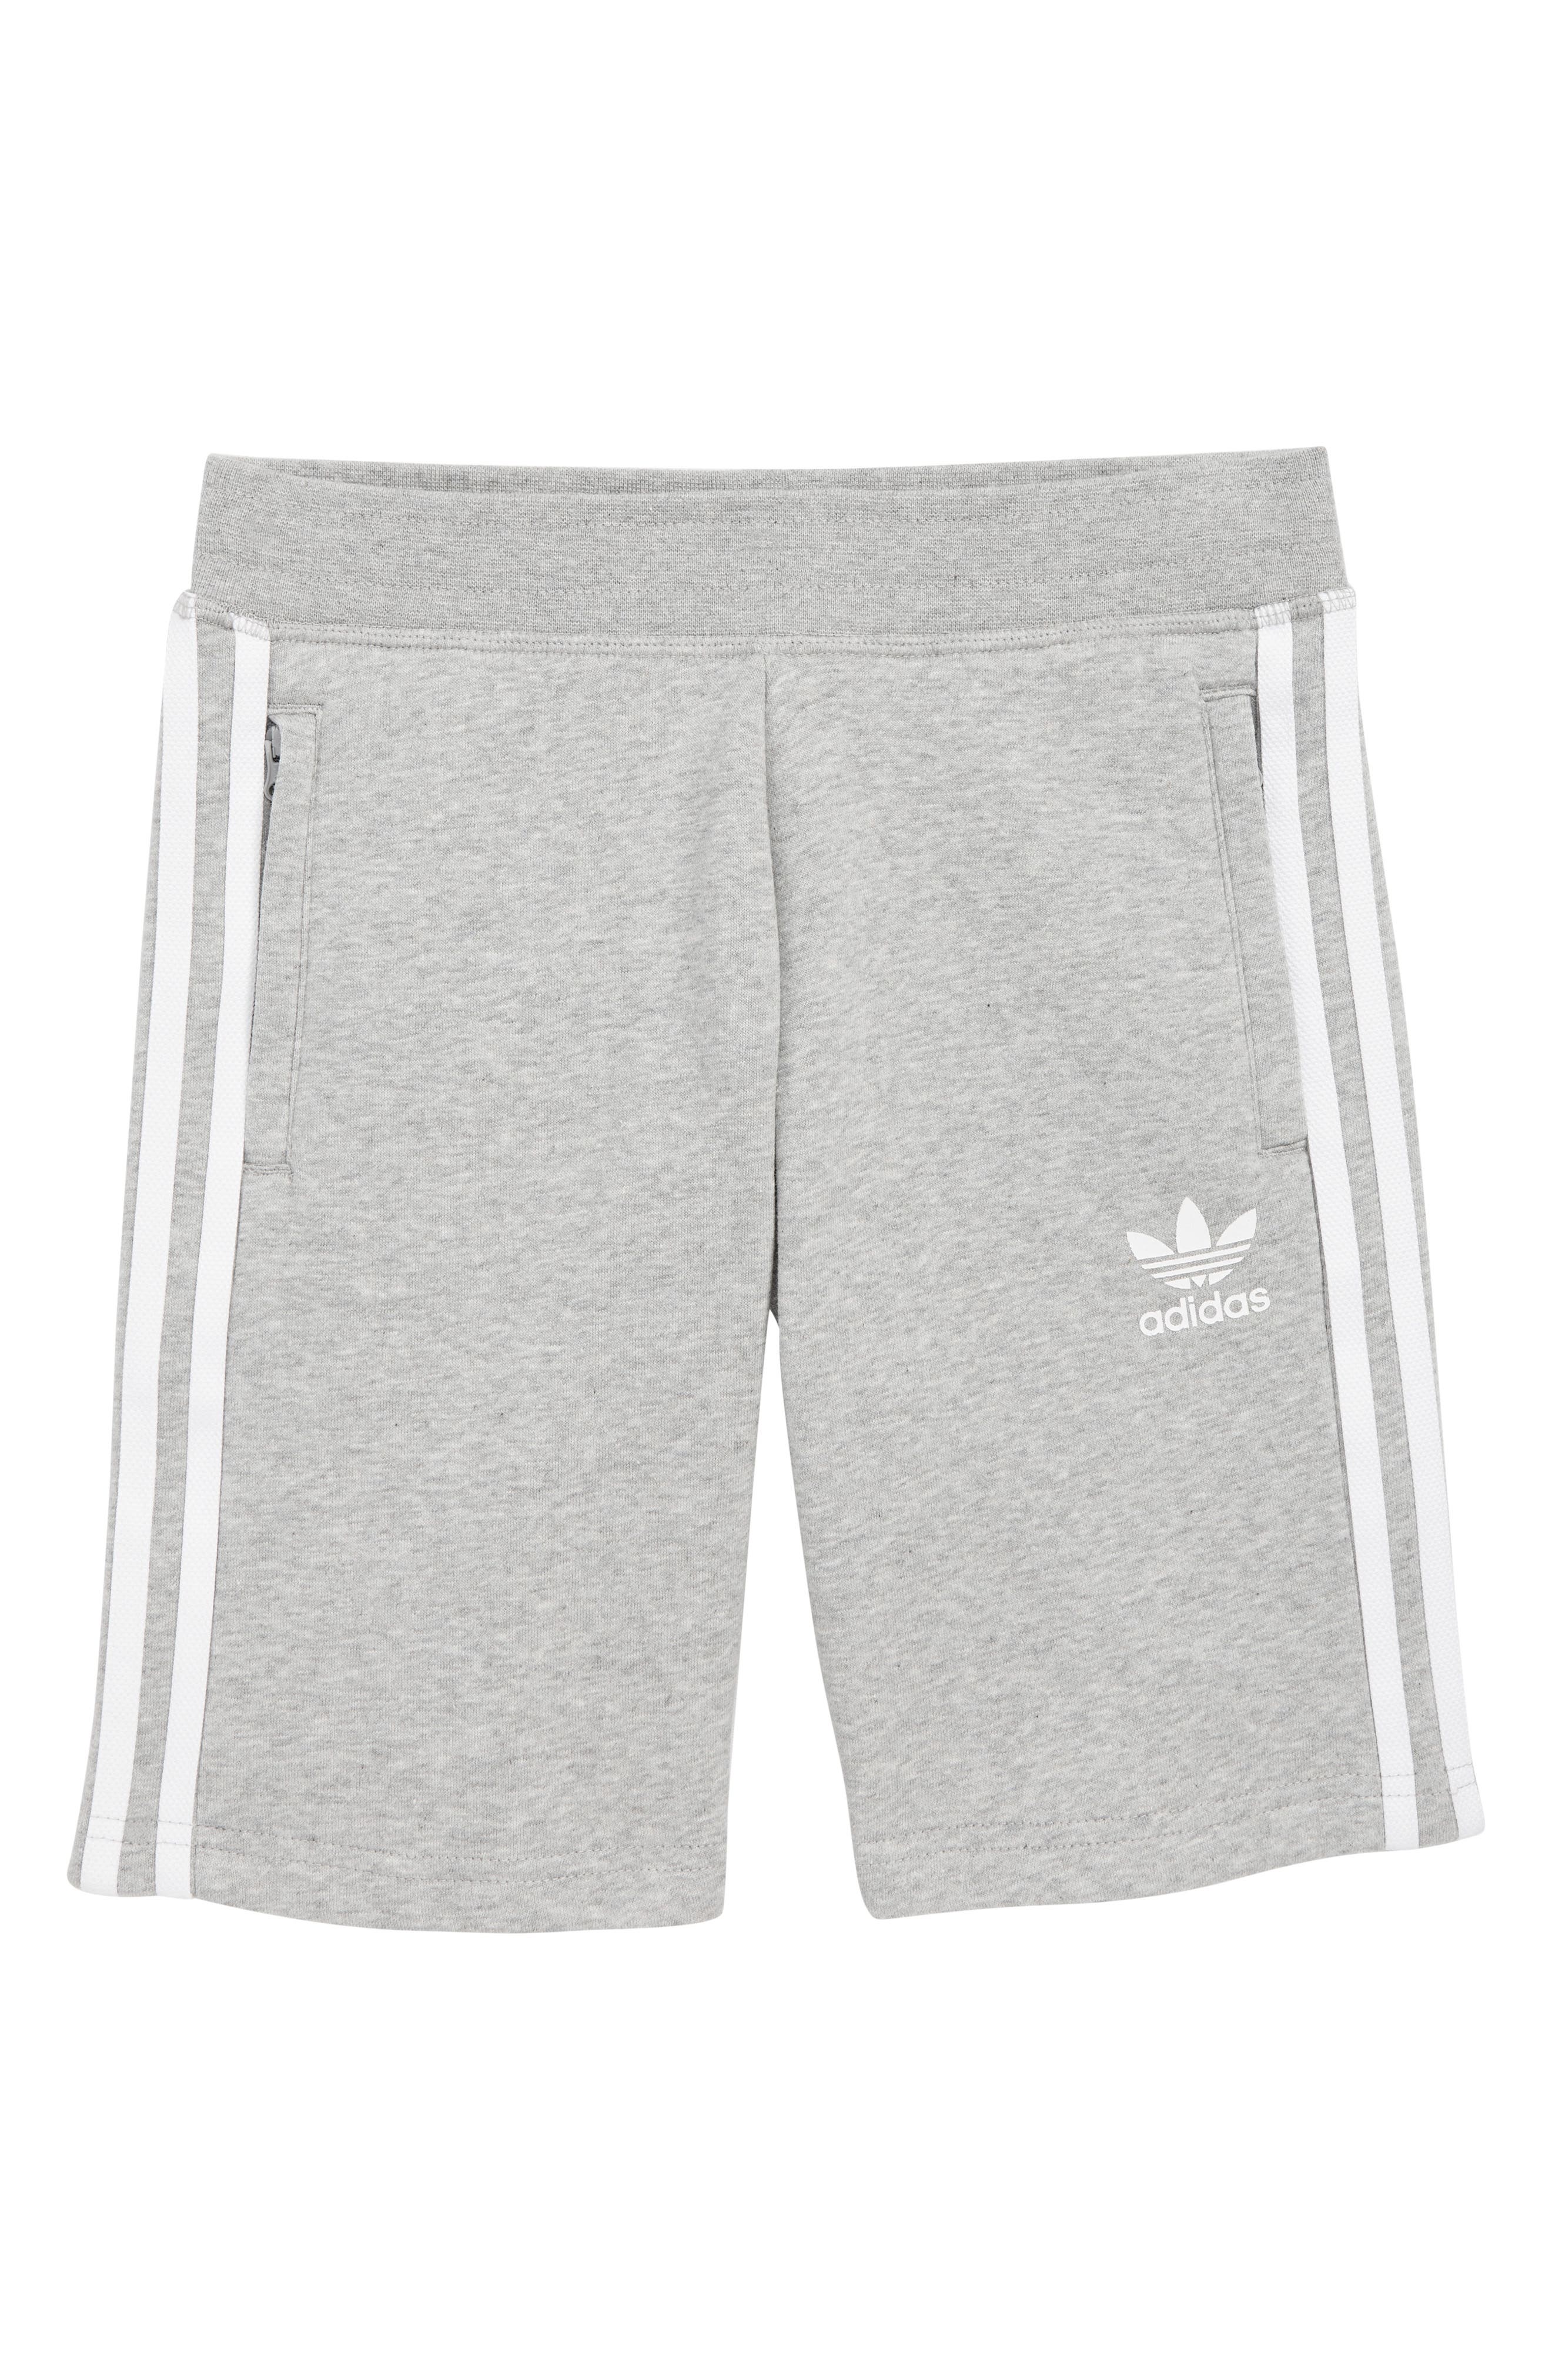 adidas Originals 3-Stripes Sweat Shorts 